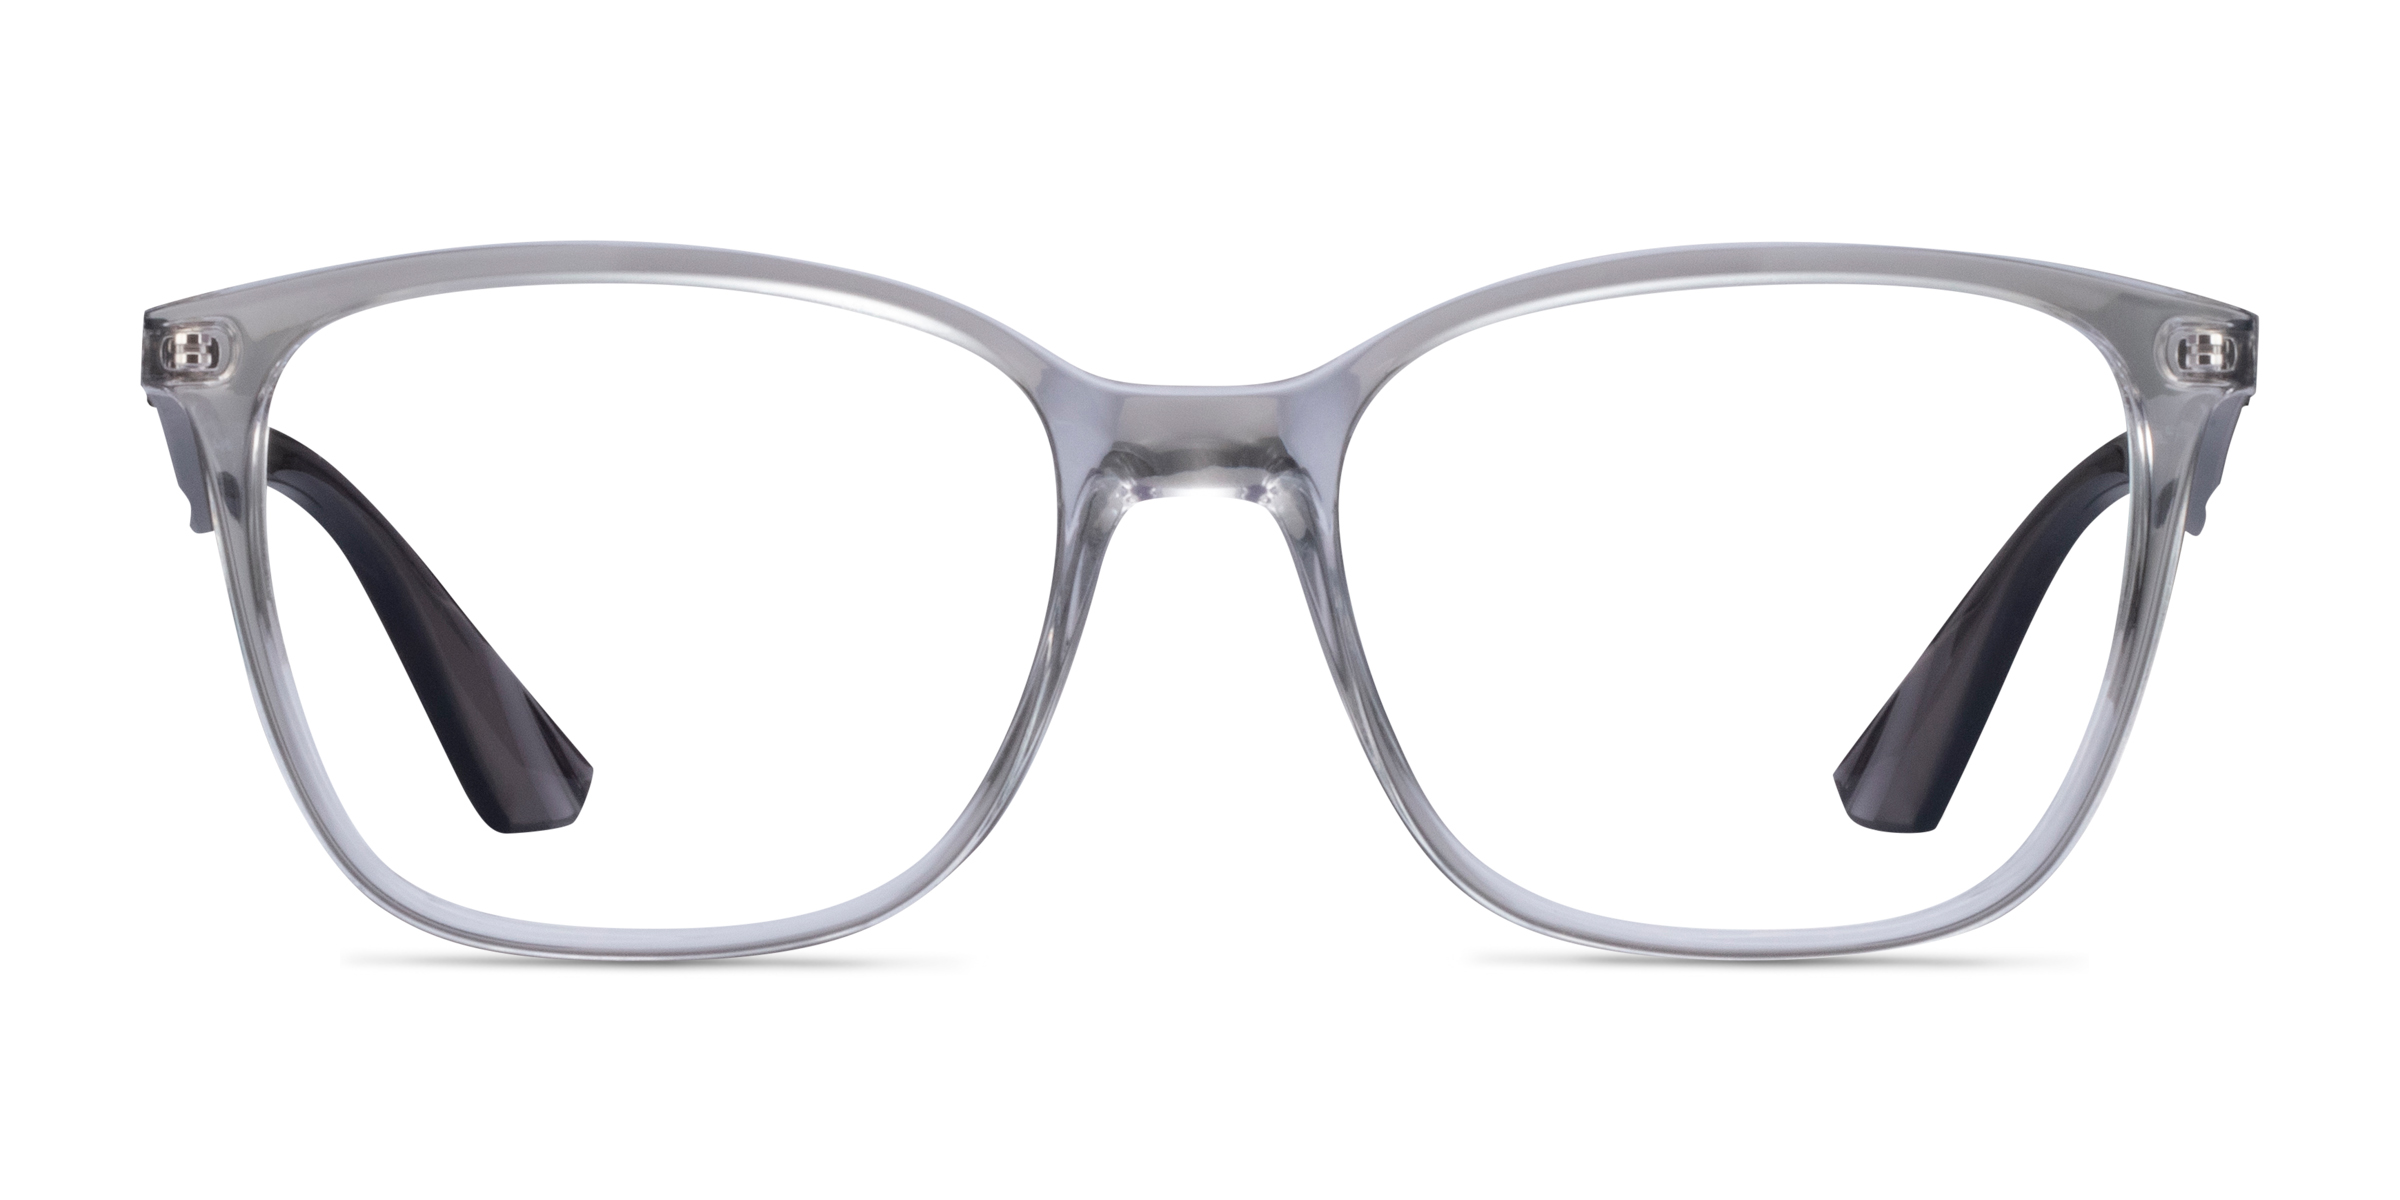 Ray-Ban RB7066 - Square Clear Gray Frame Eyeglasses | Eyebuydirect